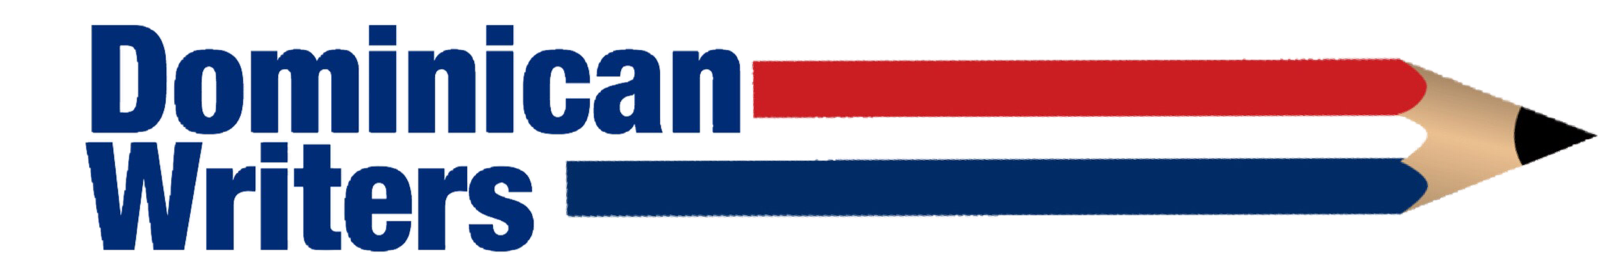 Dominican Writers Association logo